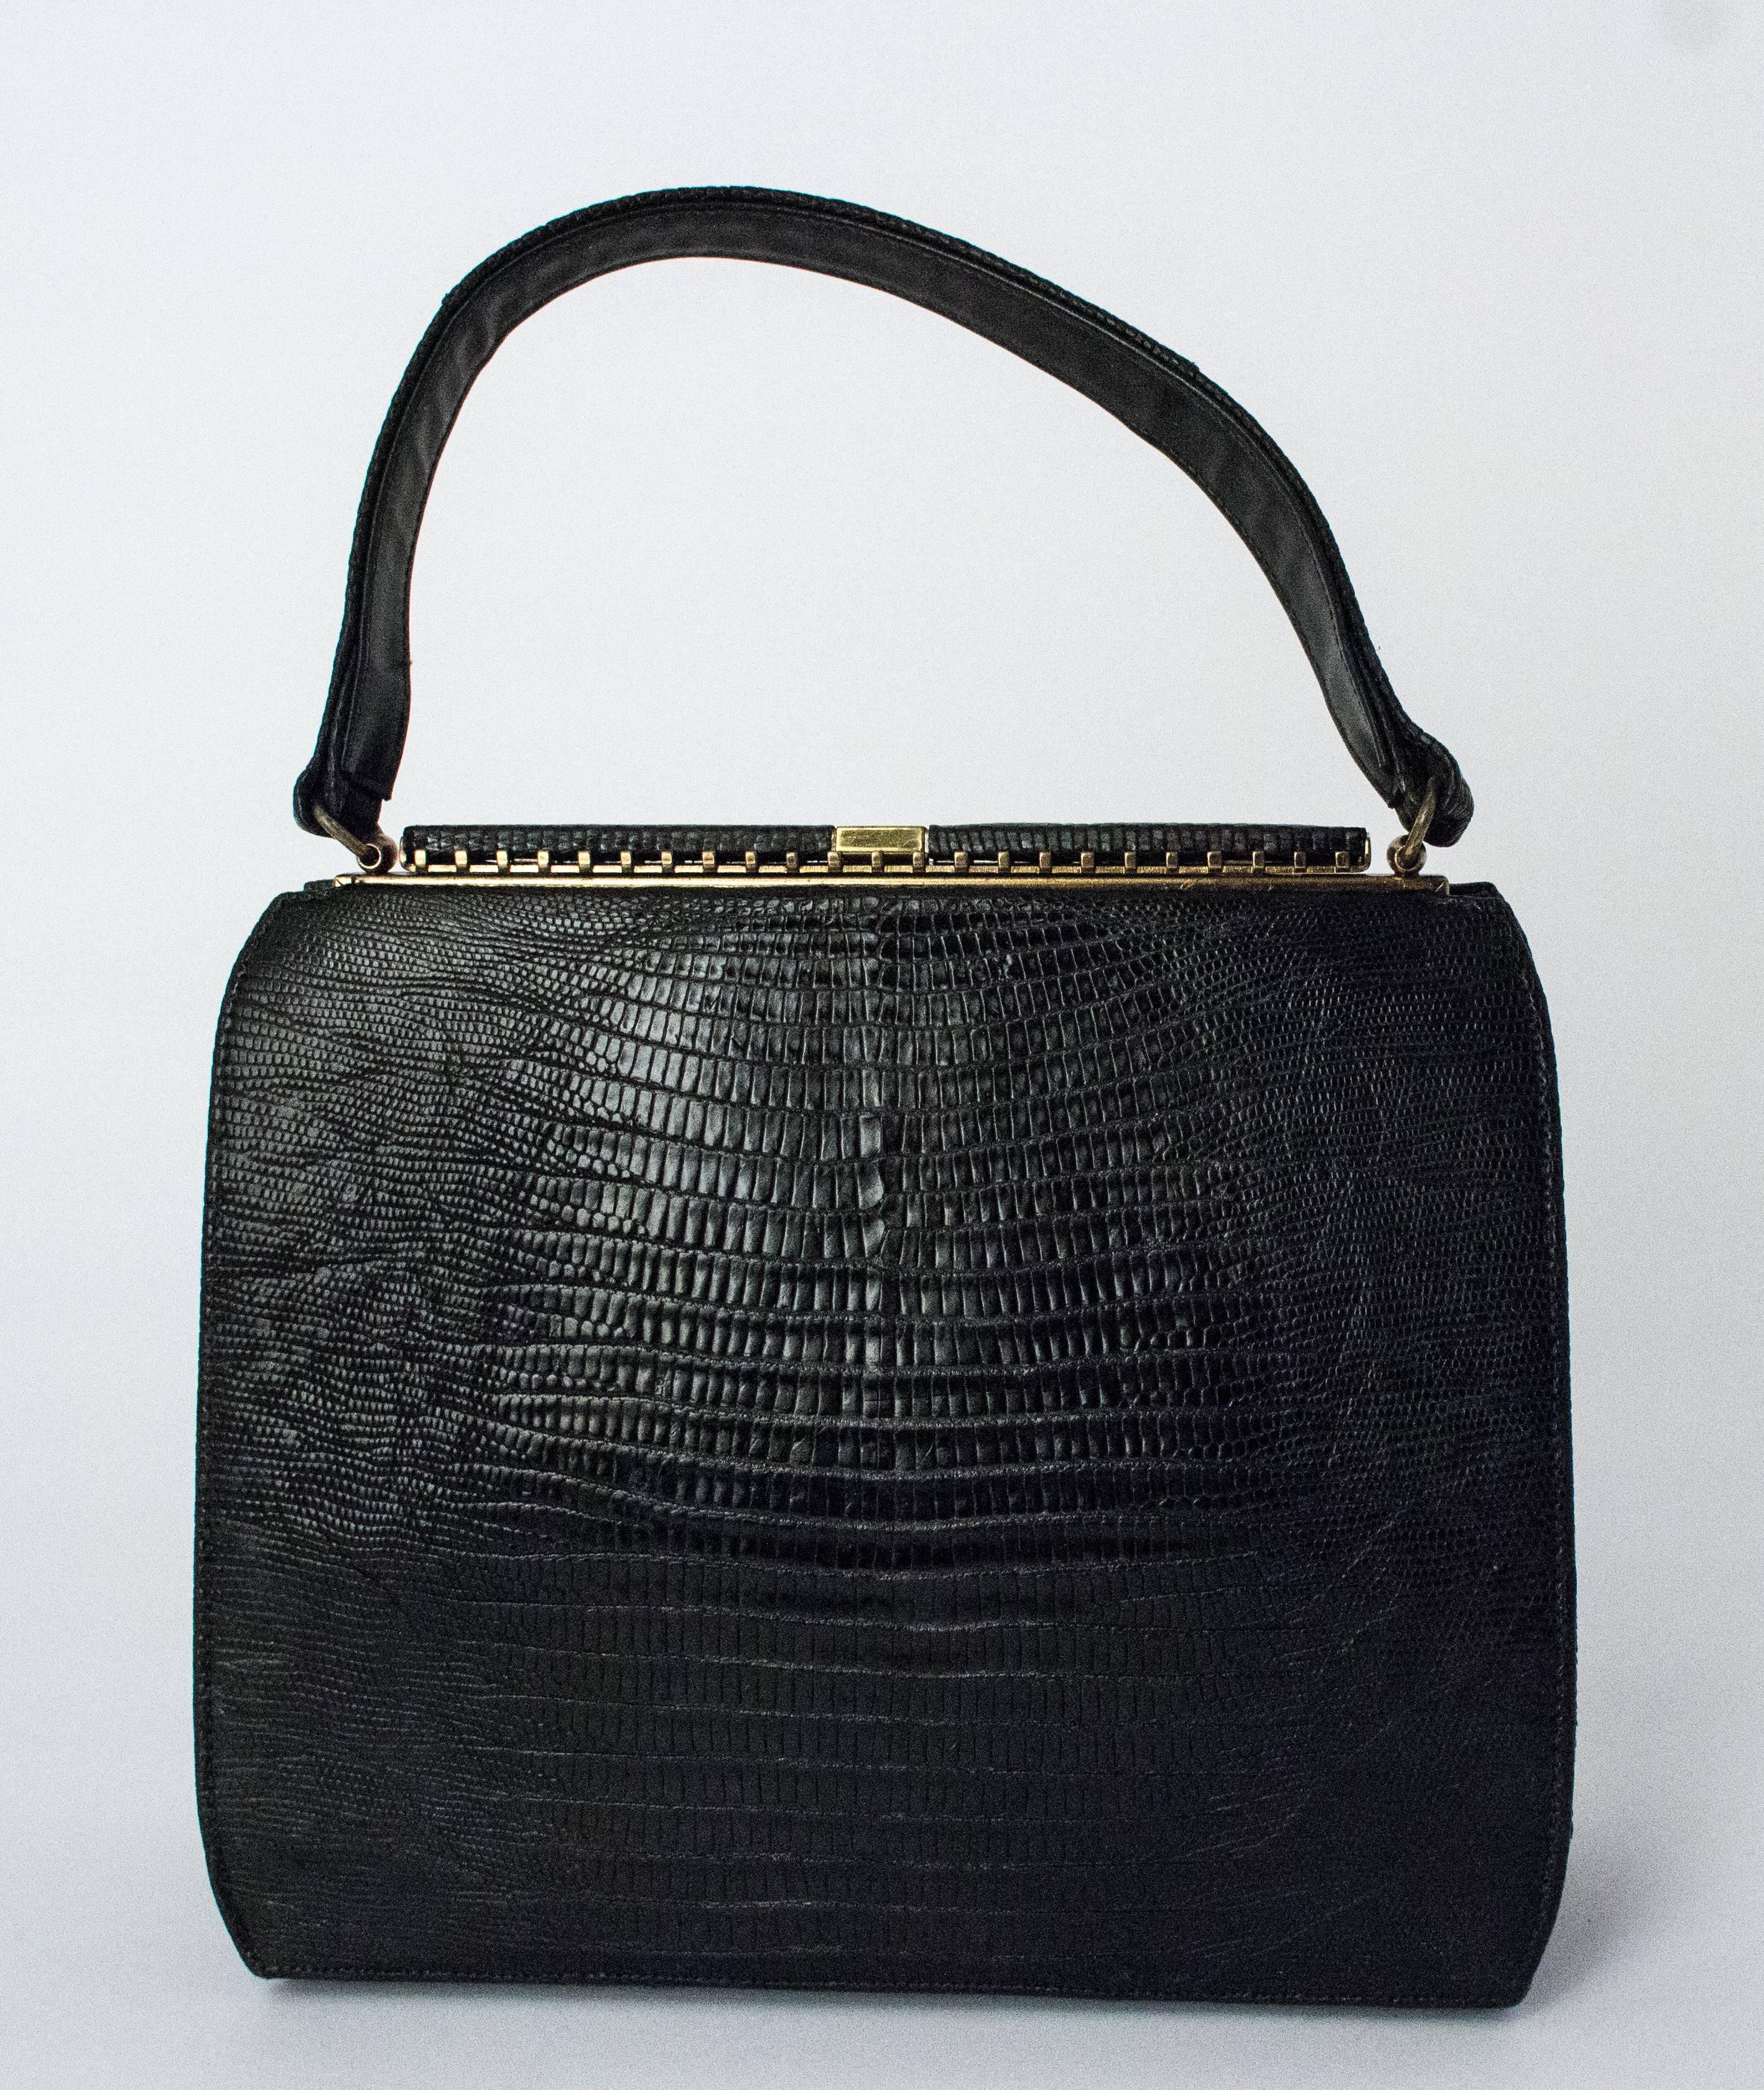 50s Roos Atkins Black Lizard Handbag. Comes with original mirror (slight tarnish), coin purse, and comb. Leather interior.